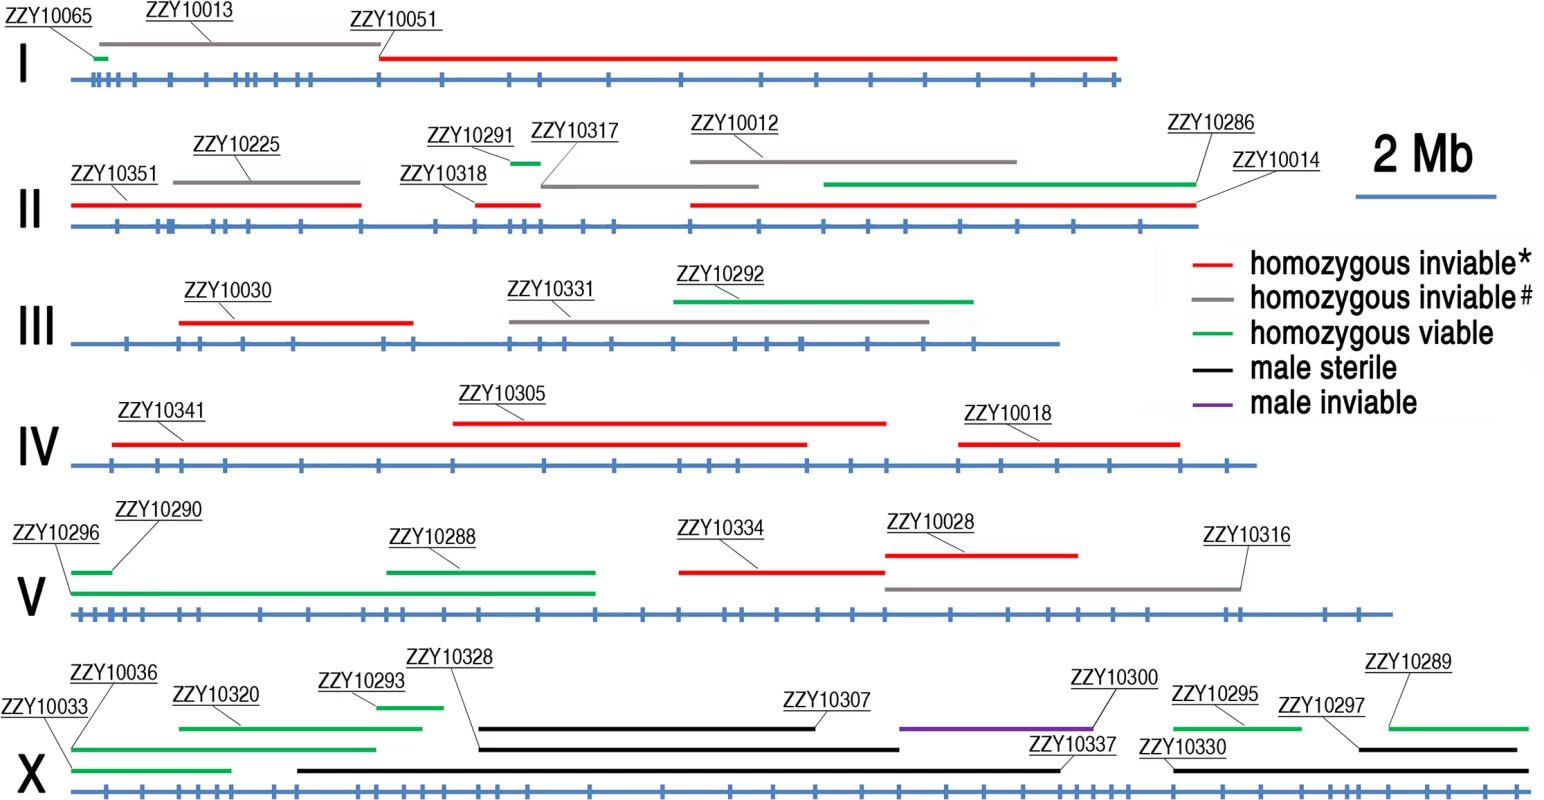 A genome-wide hybrid incompatible landscape between <i>C. briggsae</i> and <i>C. nigoni</i>.